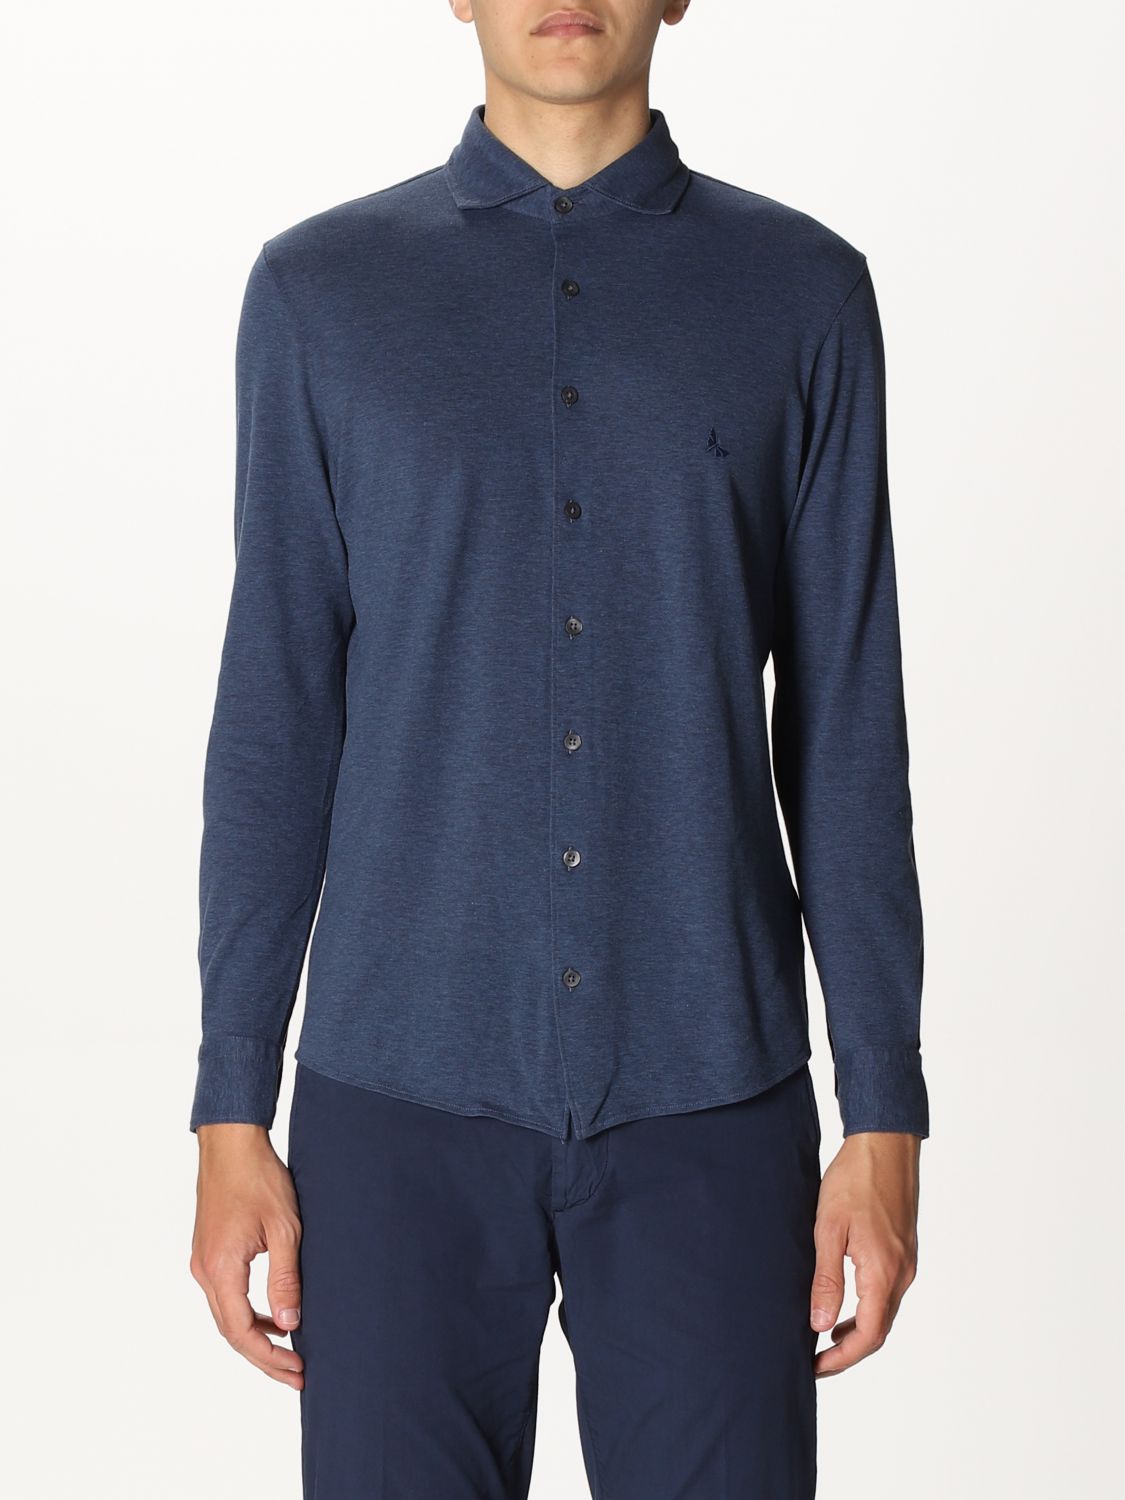 GRAN SASSO: shirt for man - Avion | Gran Sasso shirt 6012081401 online ...